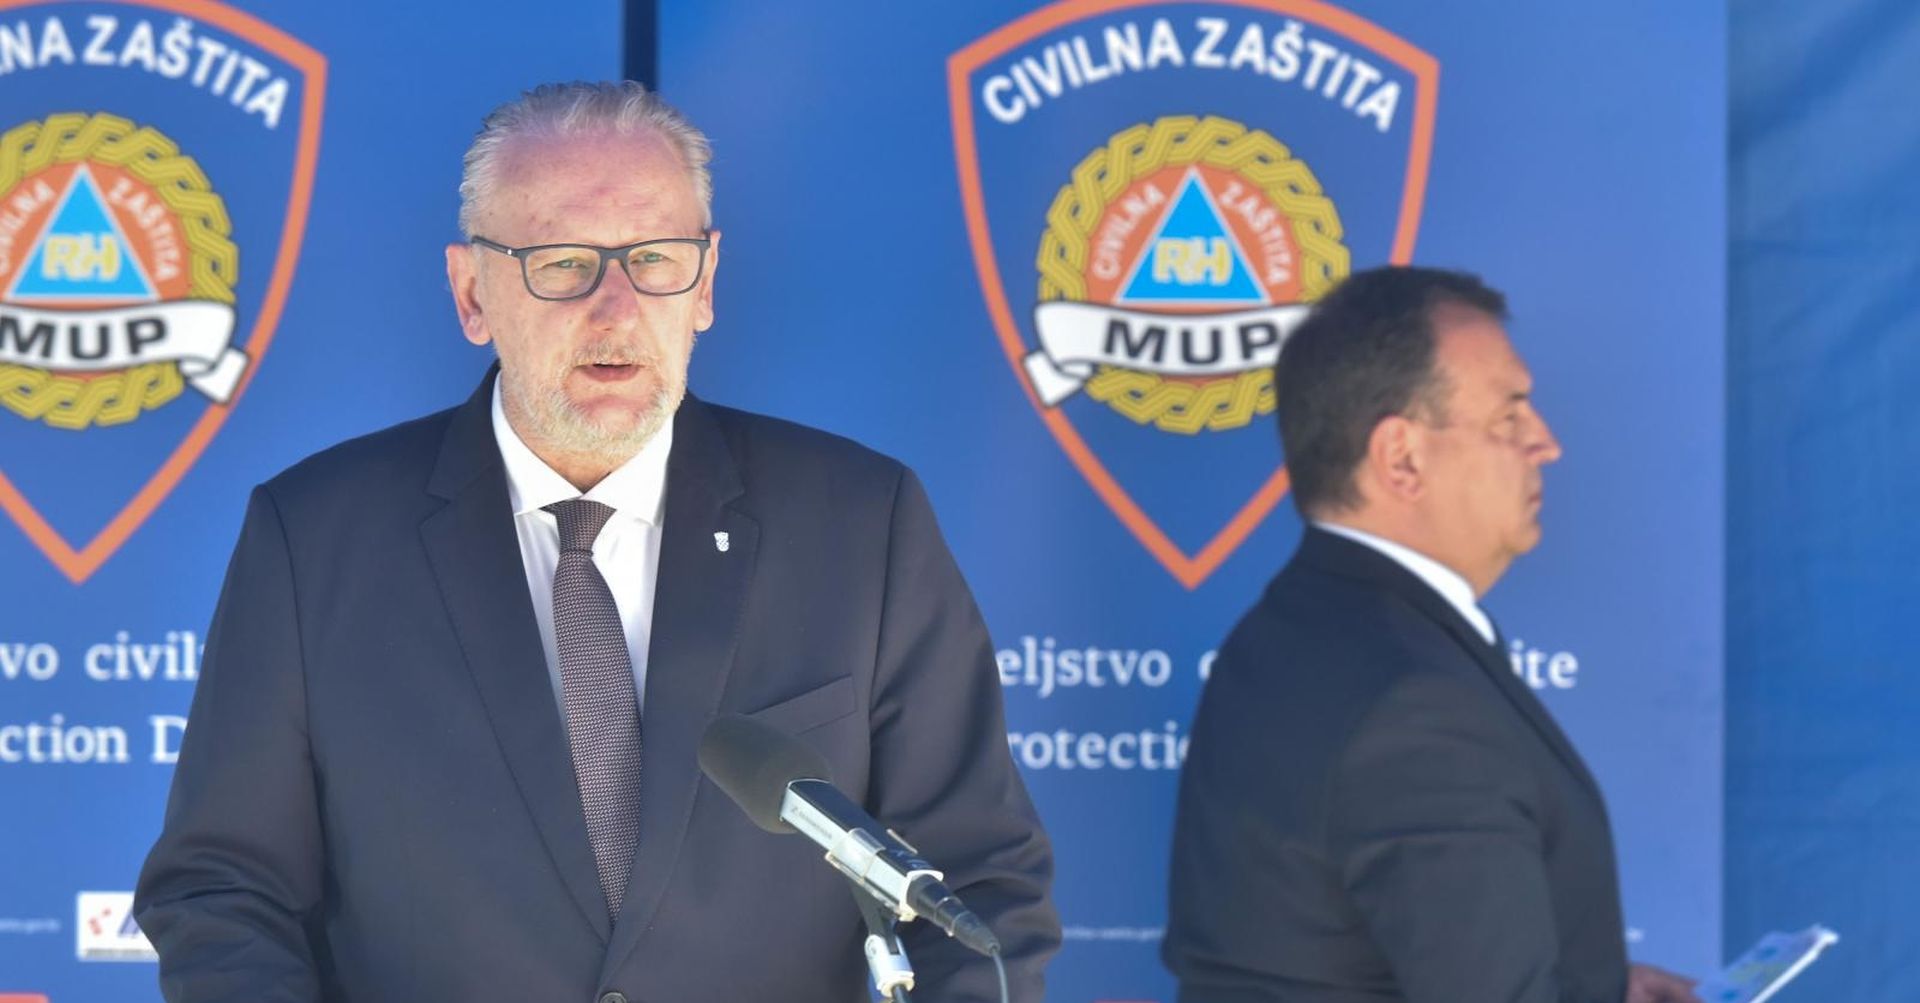 27.04.2020., Zagreb -Nacionalni stozer civilne zastite odrzao je redovitu konferenciju za medije.
Photo: Davorin Visnjic/PIXSELL